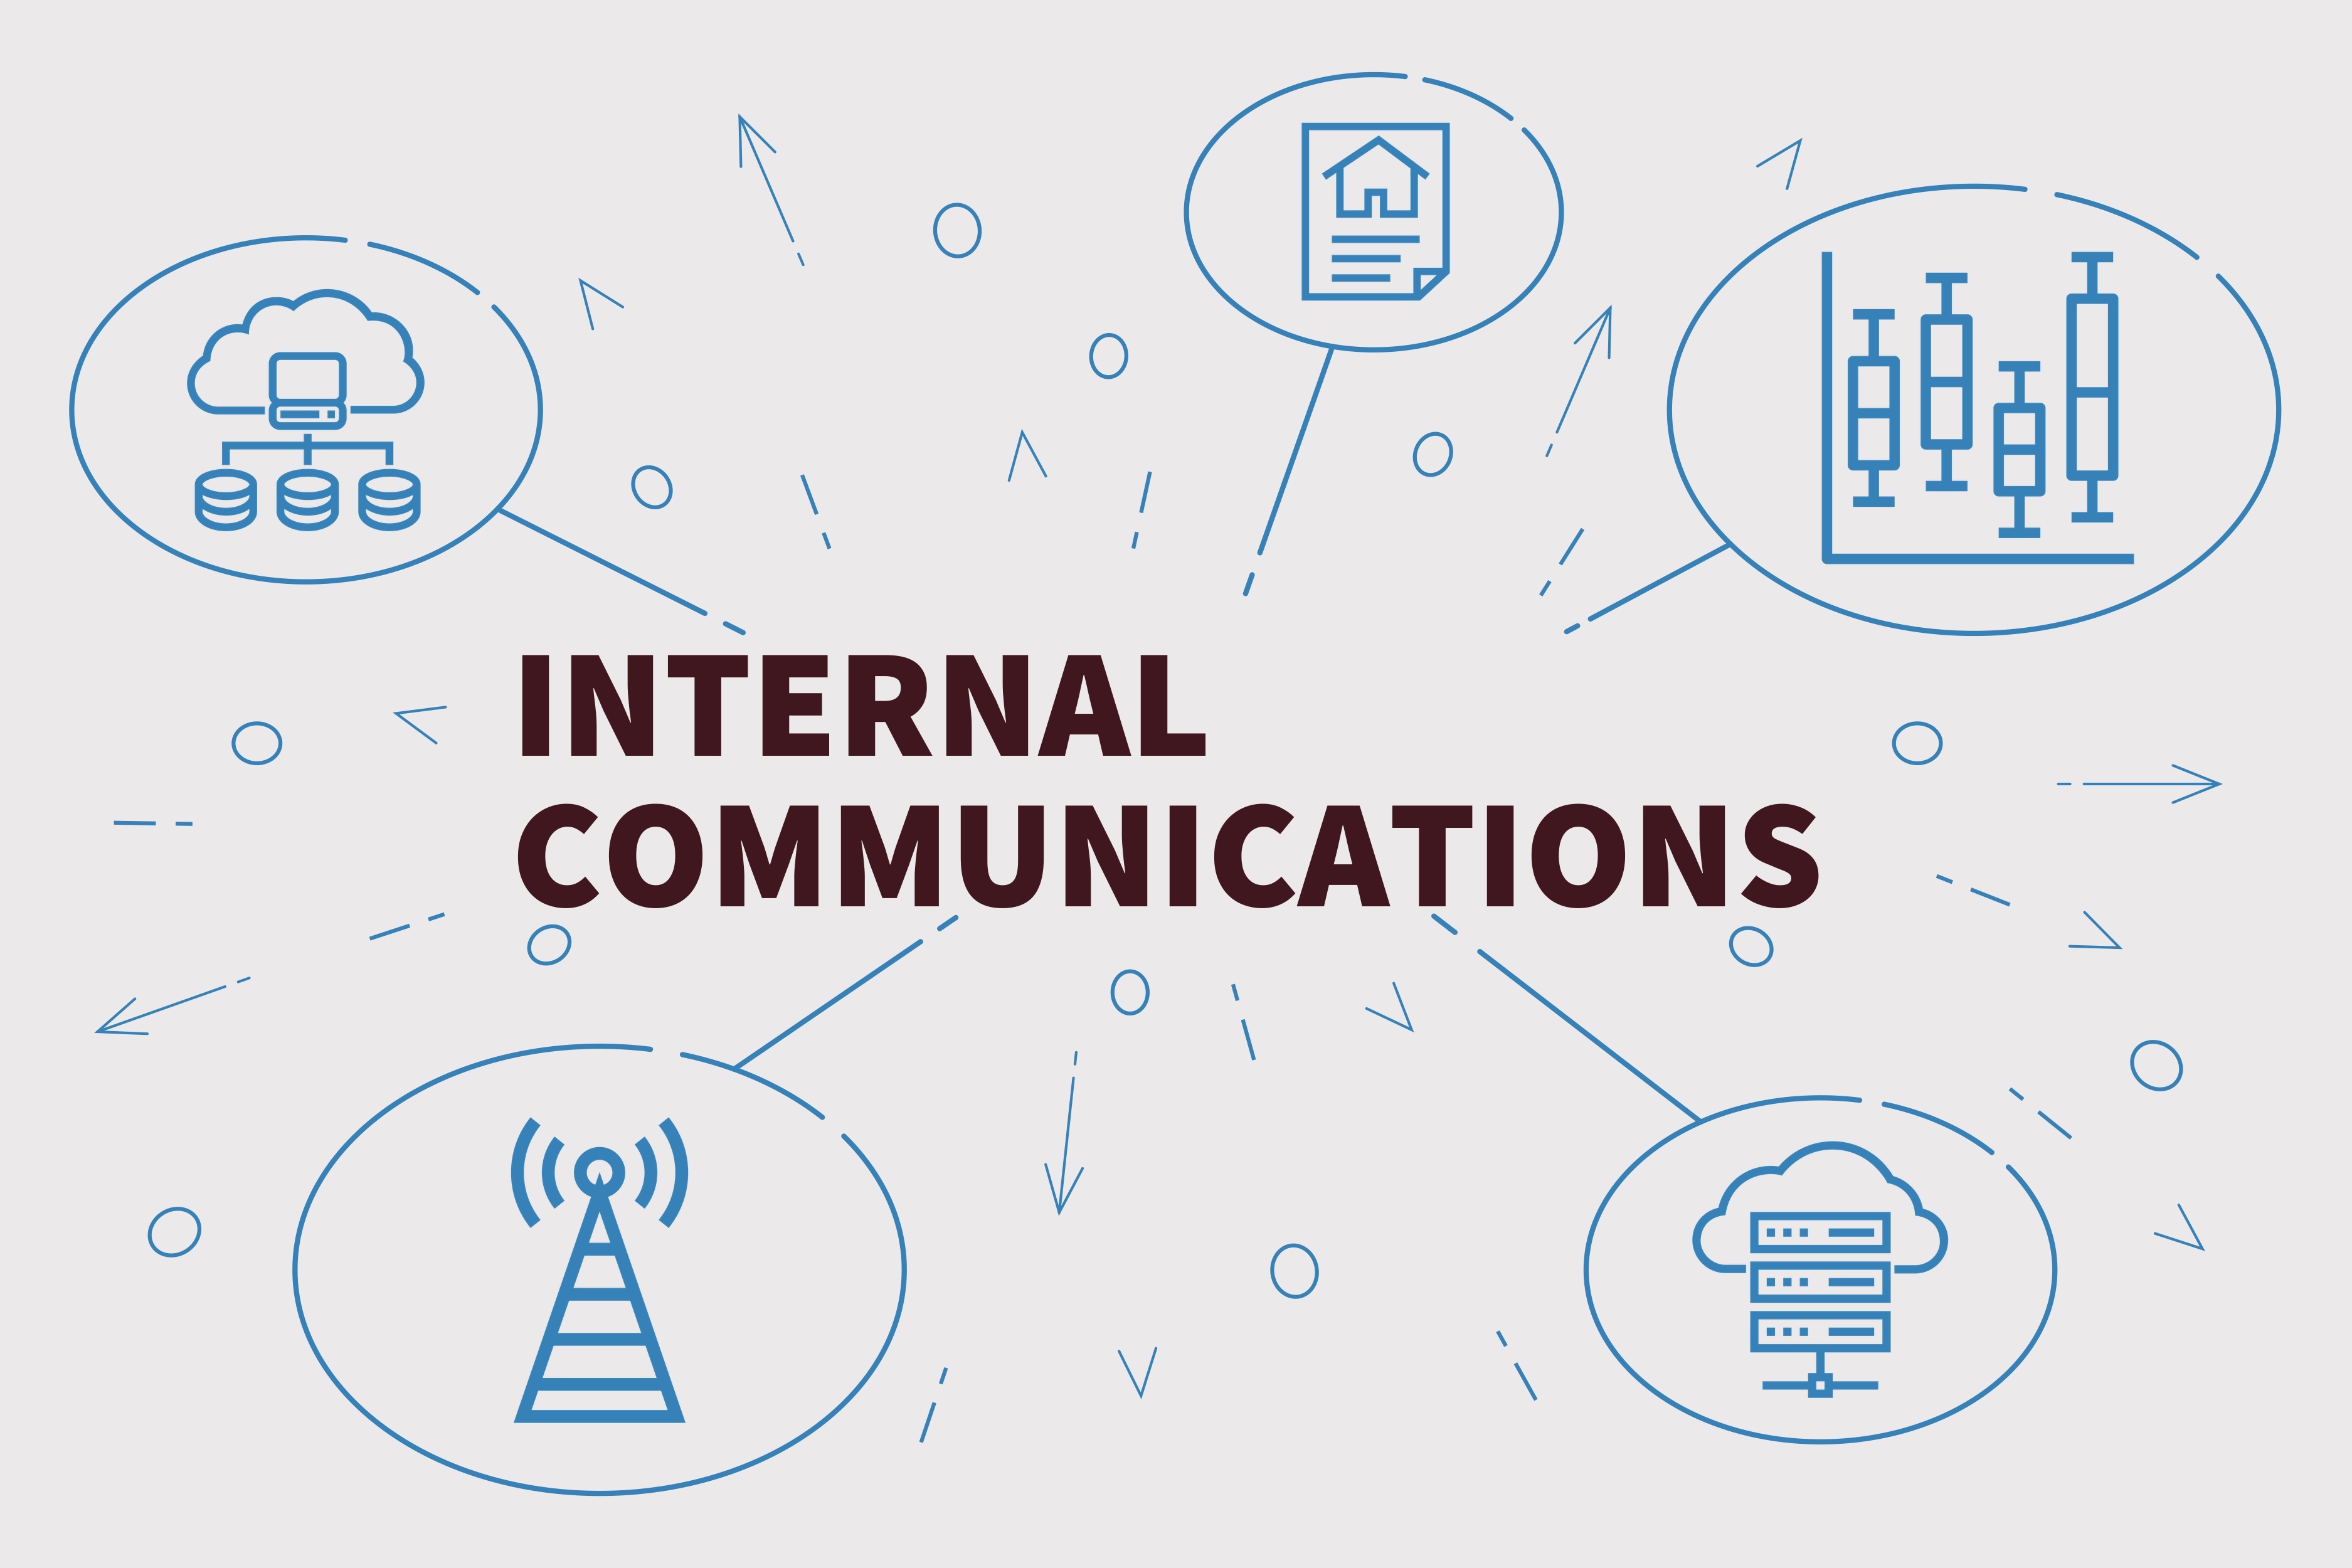 5 key functions of internal communication